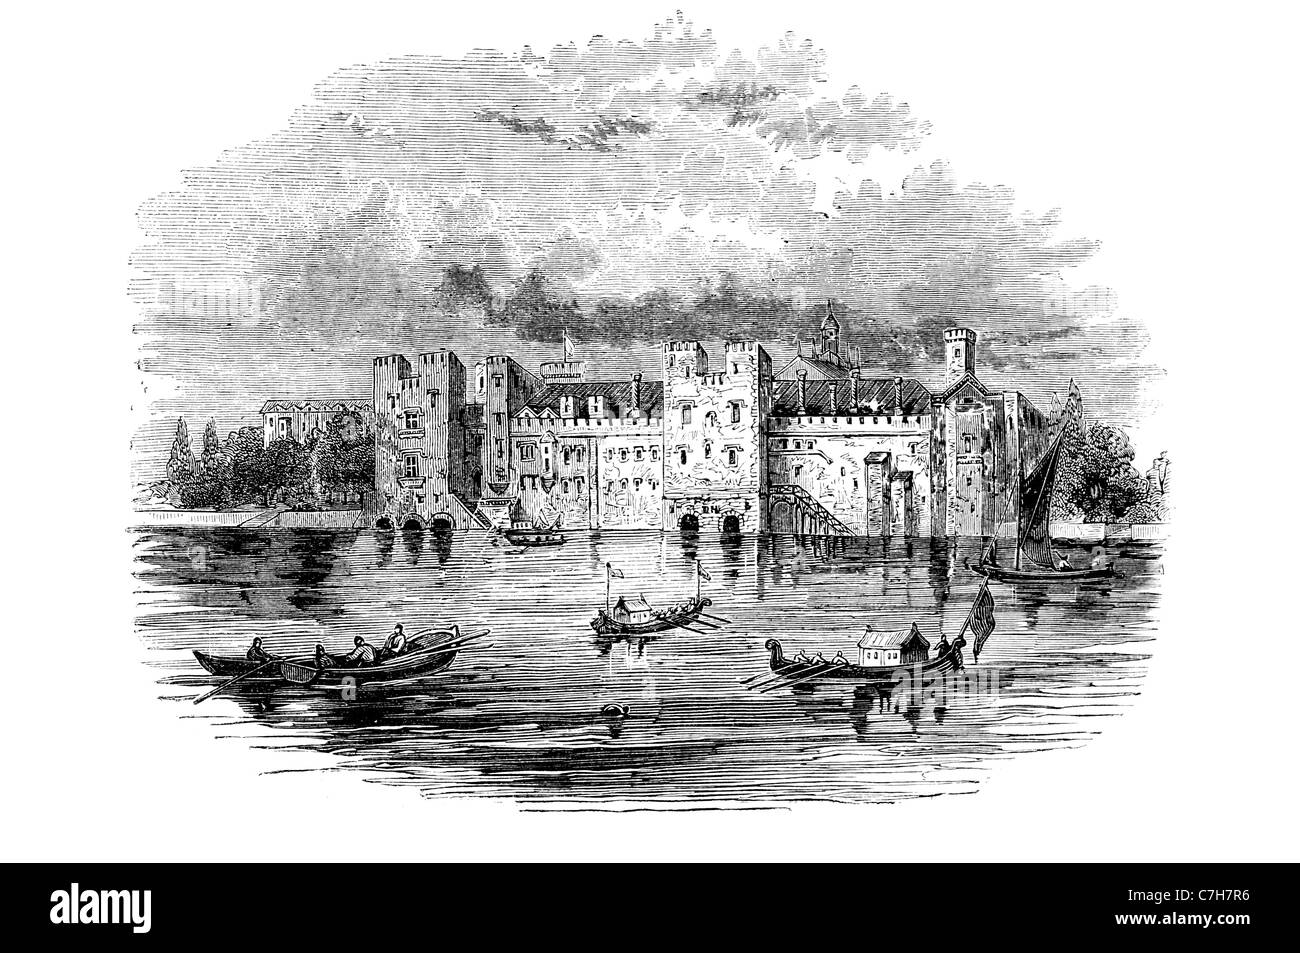 Savoy Palace großartigsten adeligen Residenz mittelalterlichen London Peasants' Revolt Strang Mittelalter Adelspalästen Adel Architektur Stockfoto